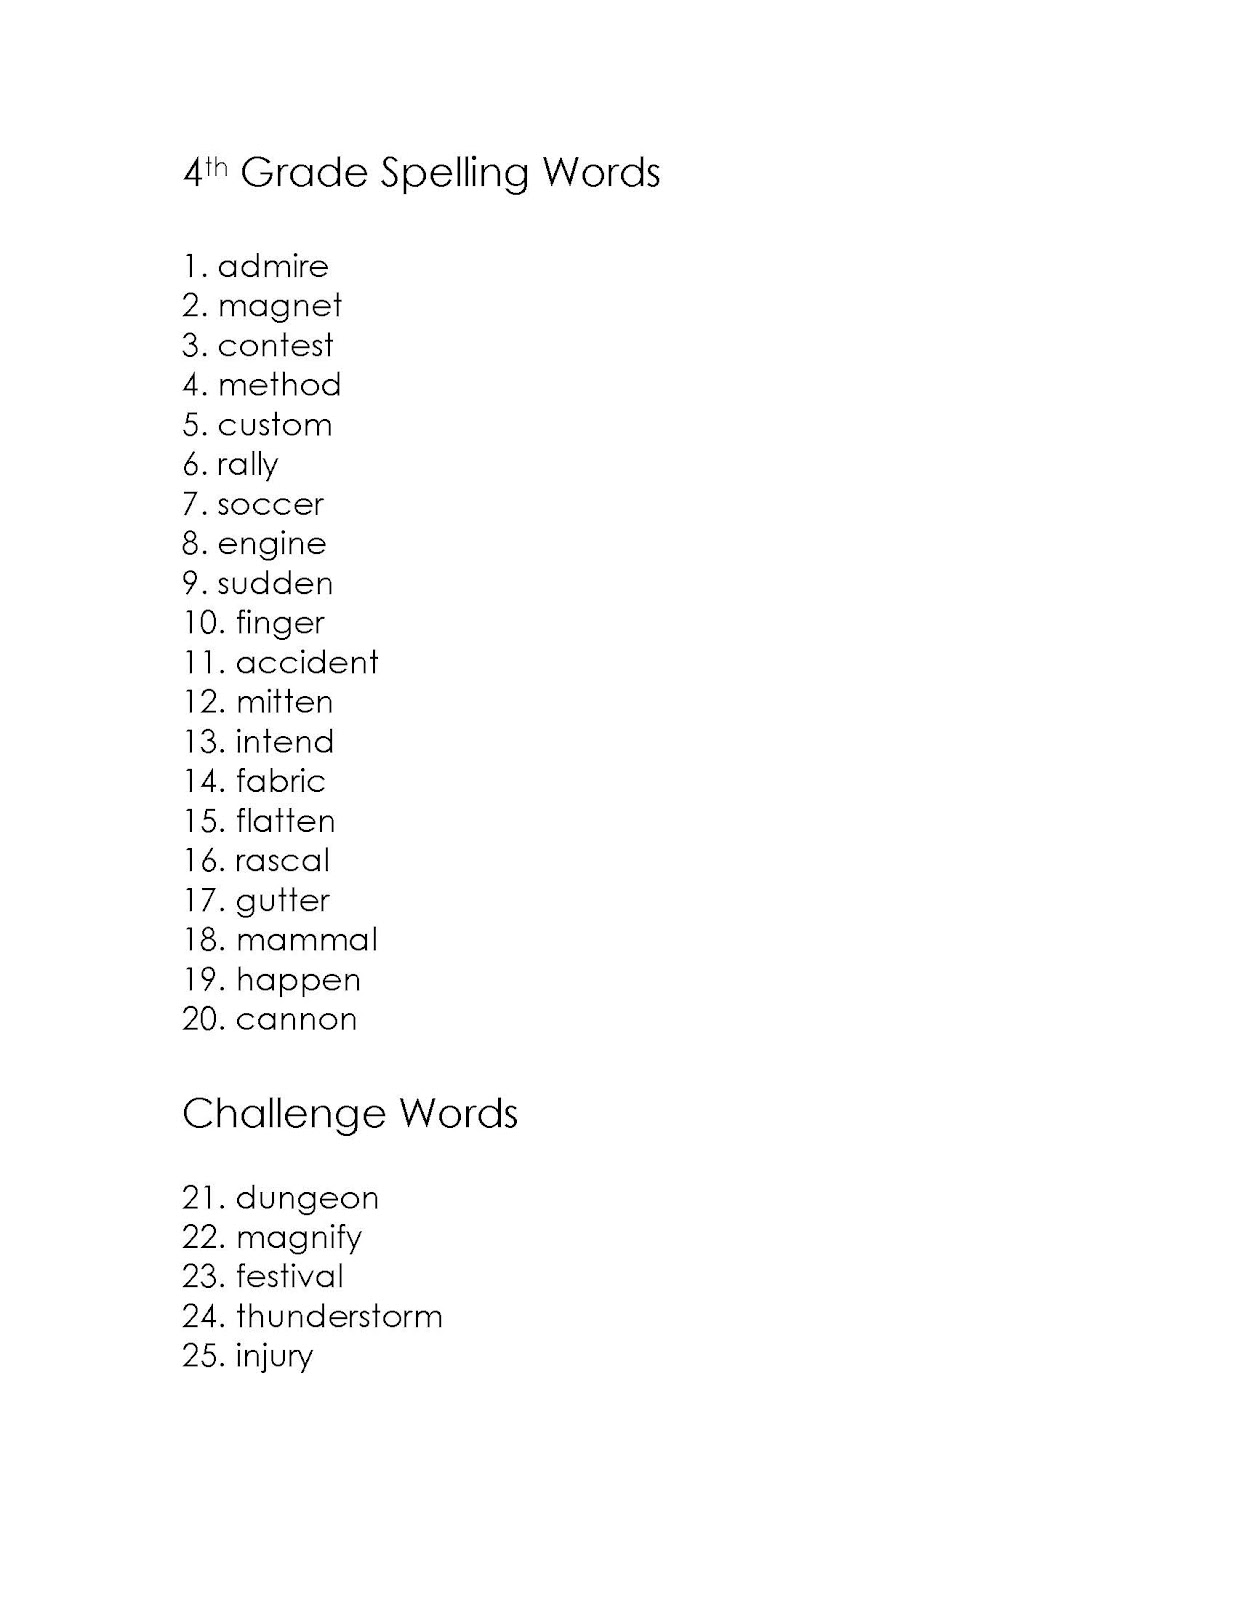 Ms. McGurn's Classroom: Spelling Lists